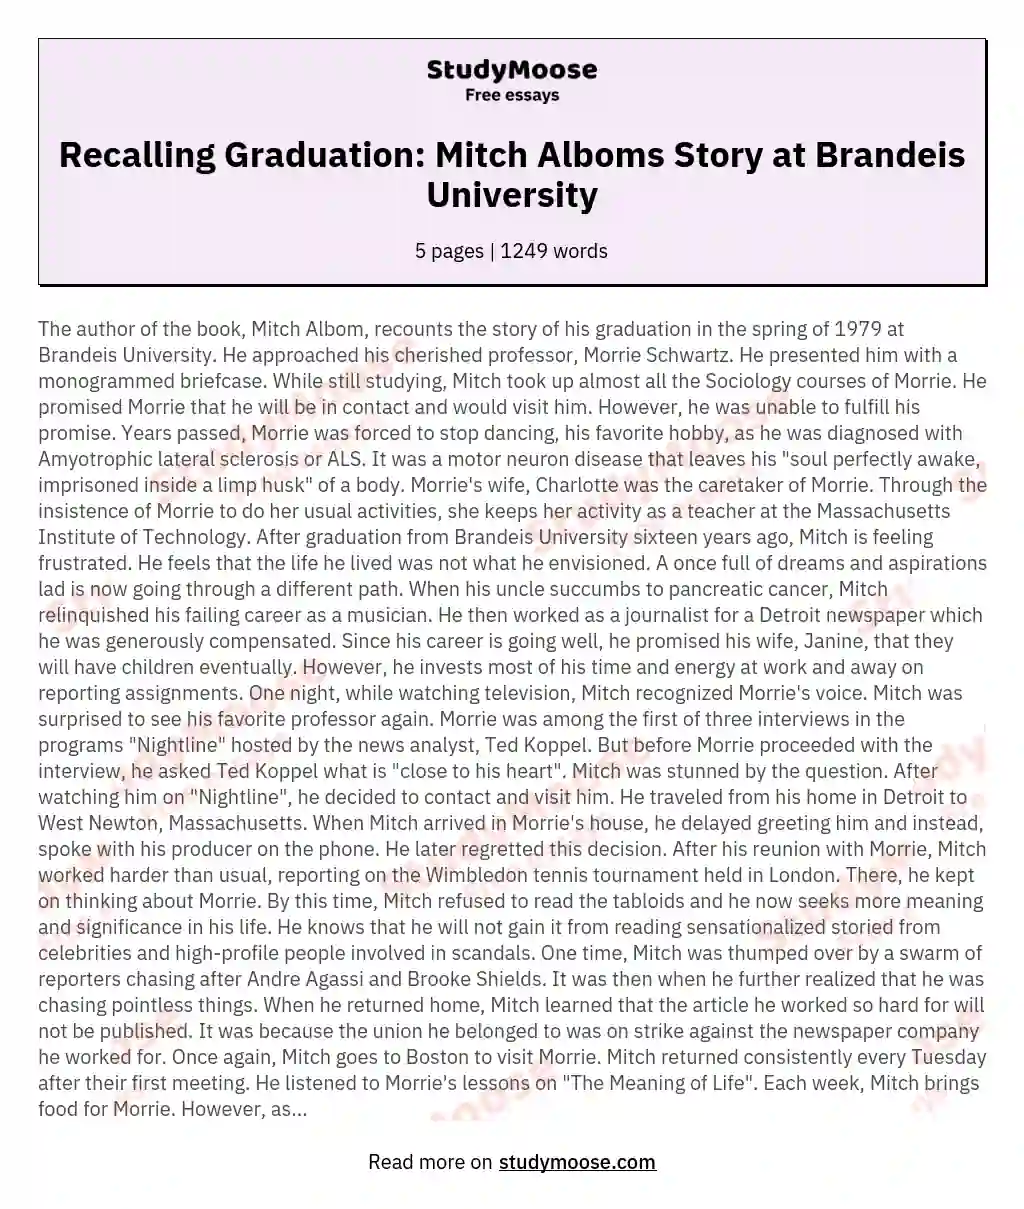 Recalling Graduation: Mitch Alboms Story at Brandeis University essay